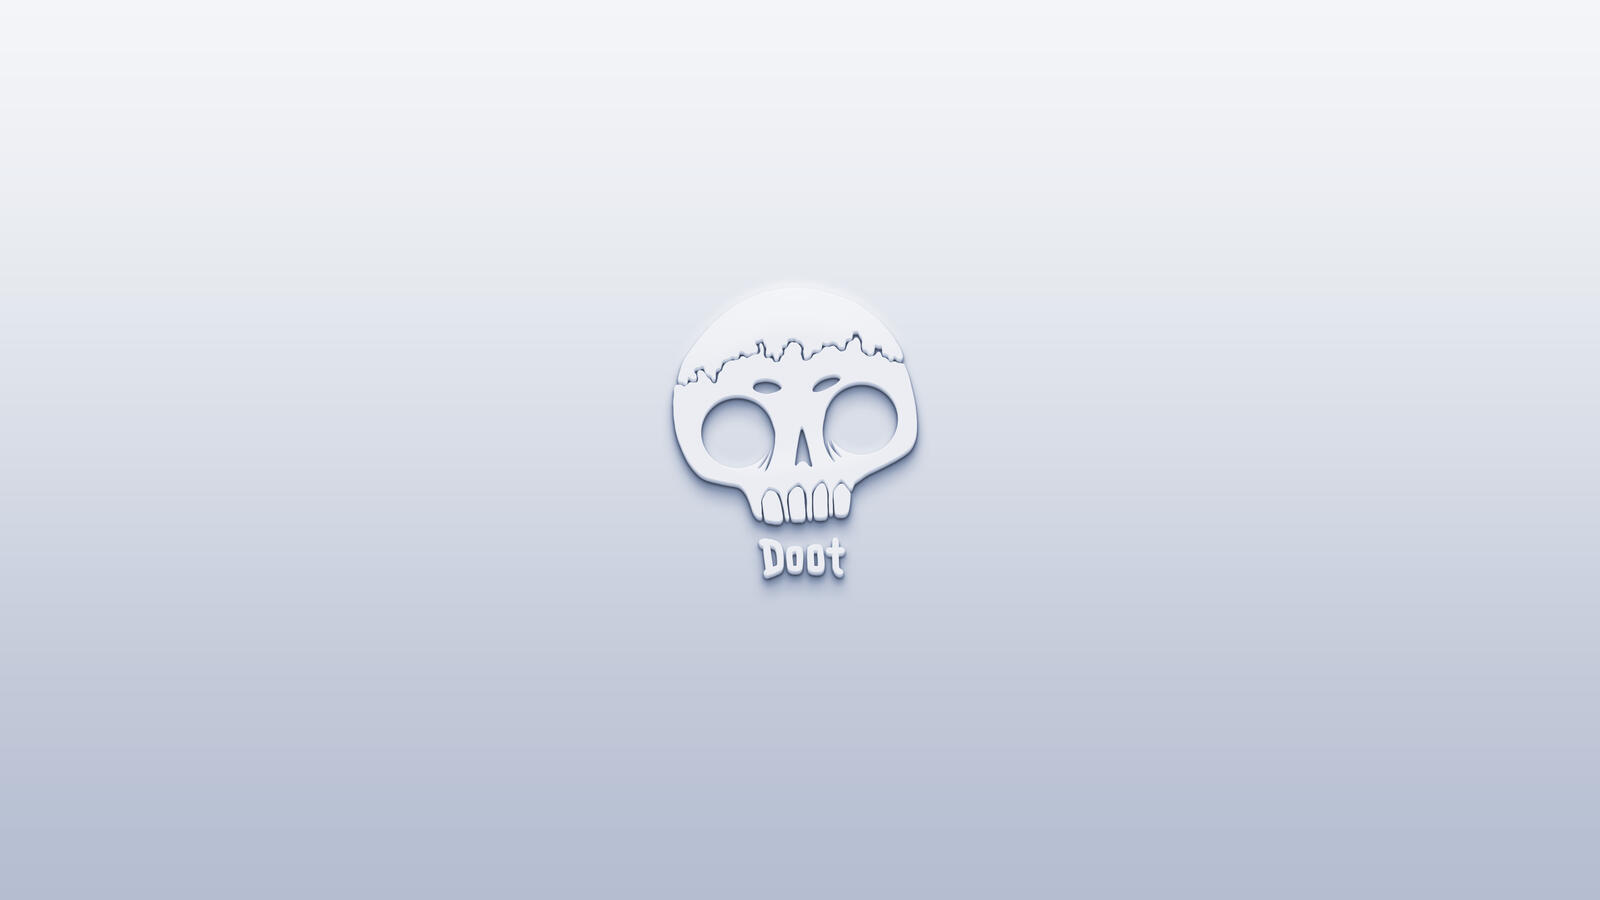 Wallpapers skull Doot logo on the desktop